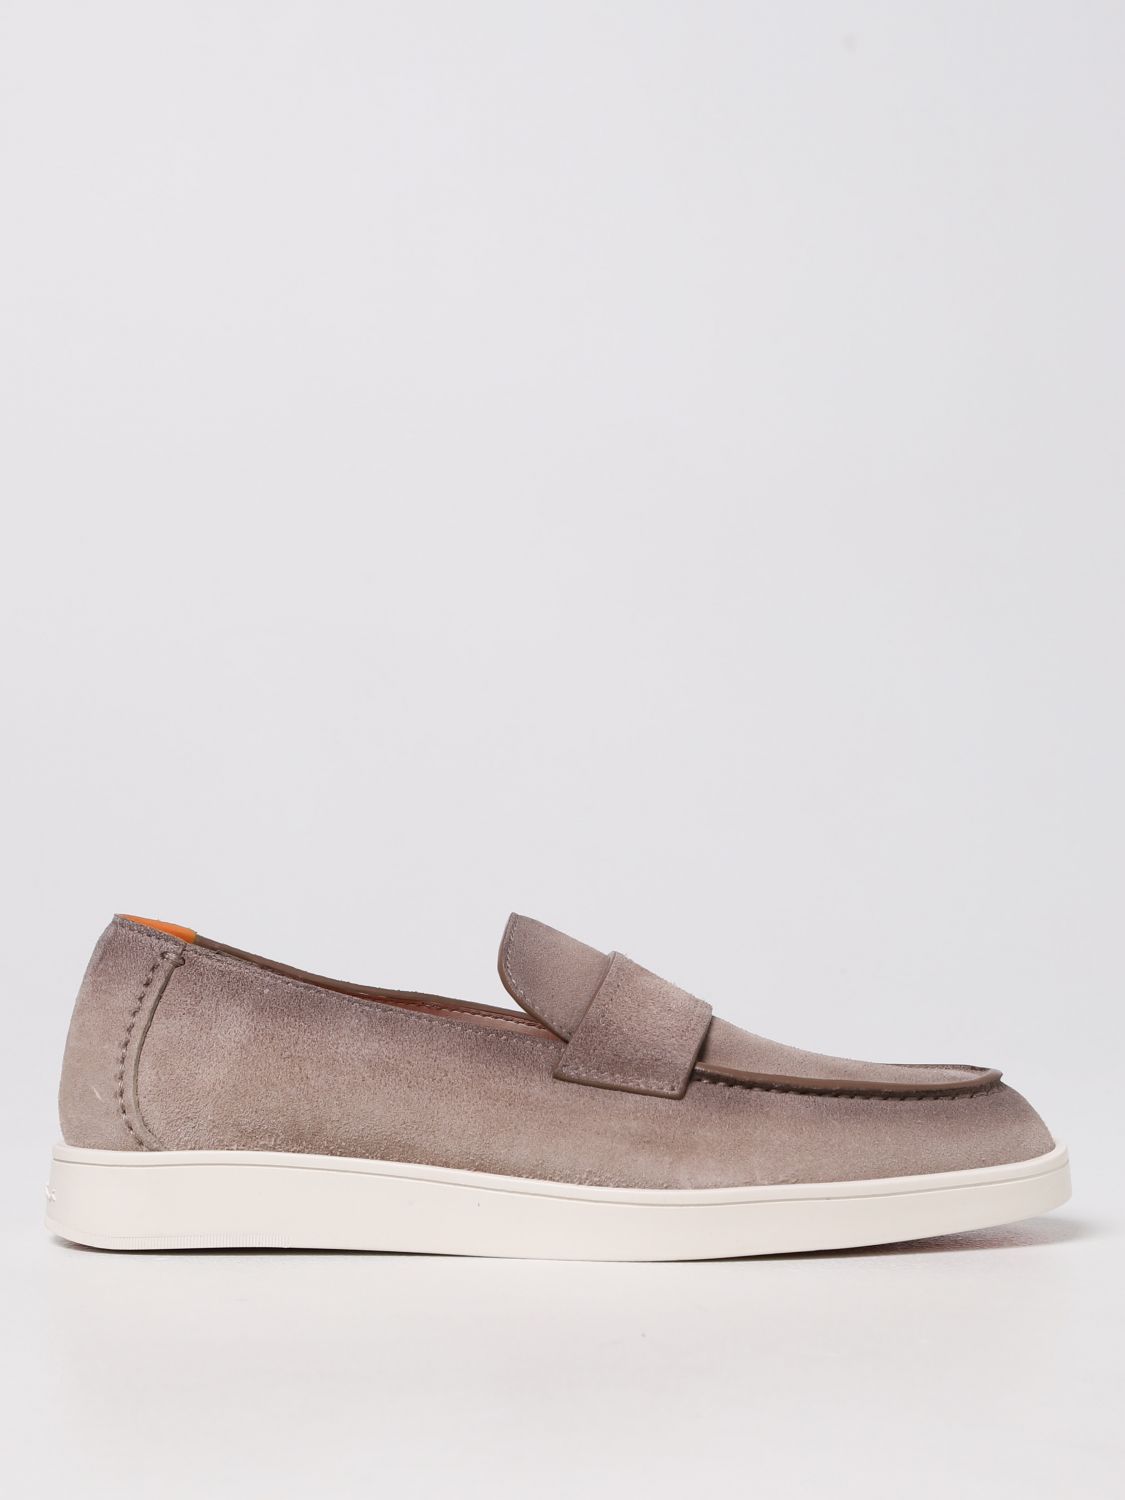 SANTONI: moccasin in worn suede - Beige | Santoni loafers ...